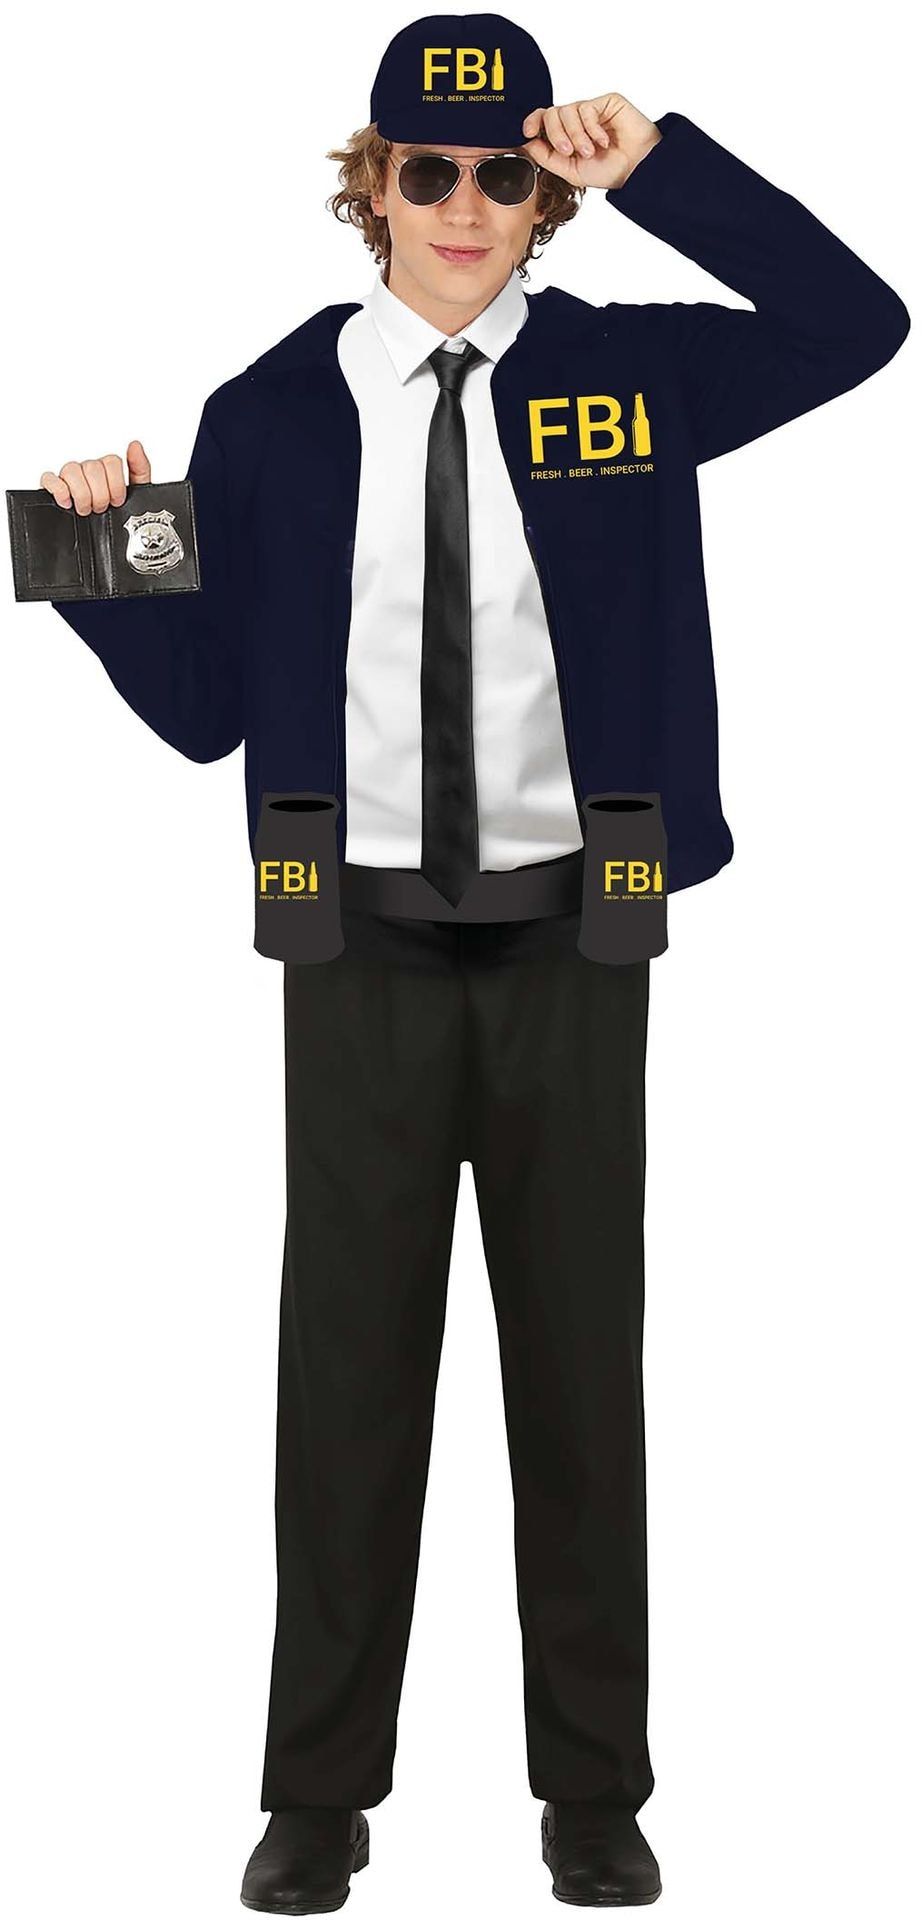 FBI bier inspecteur kostuum